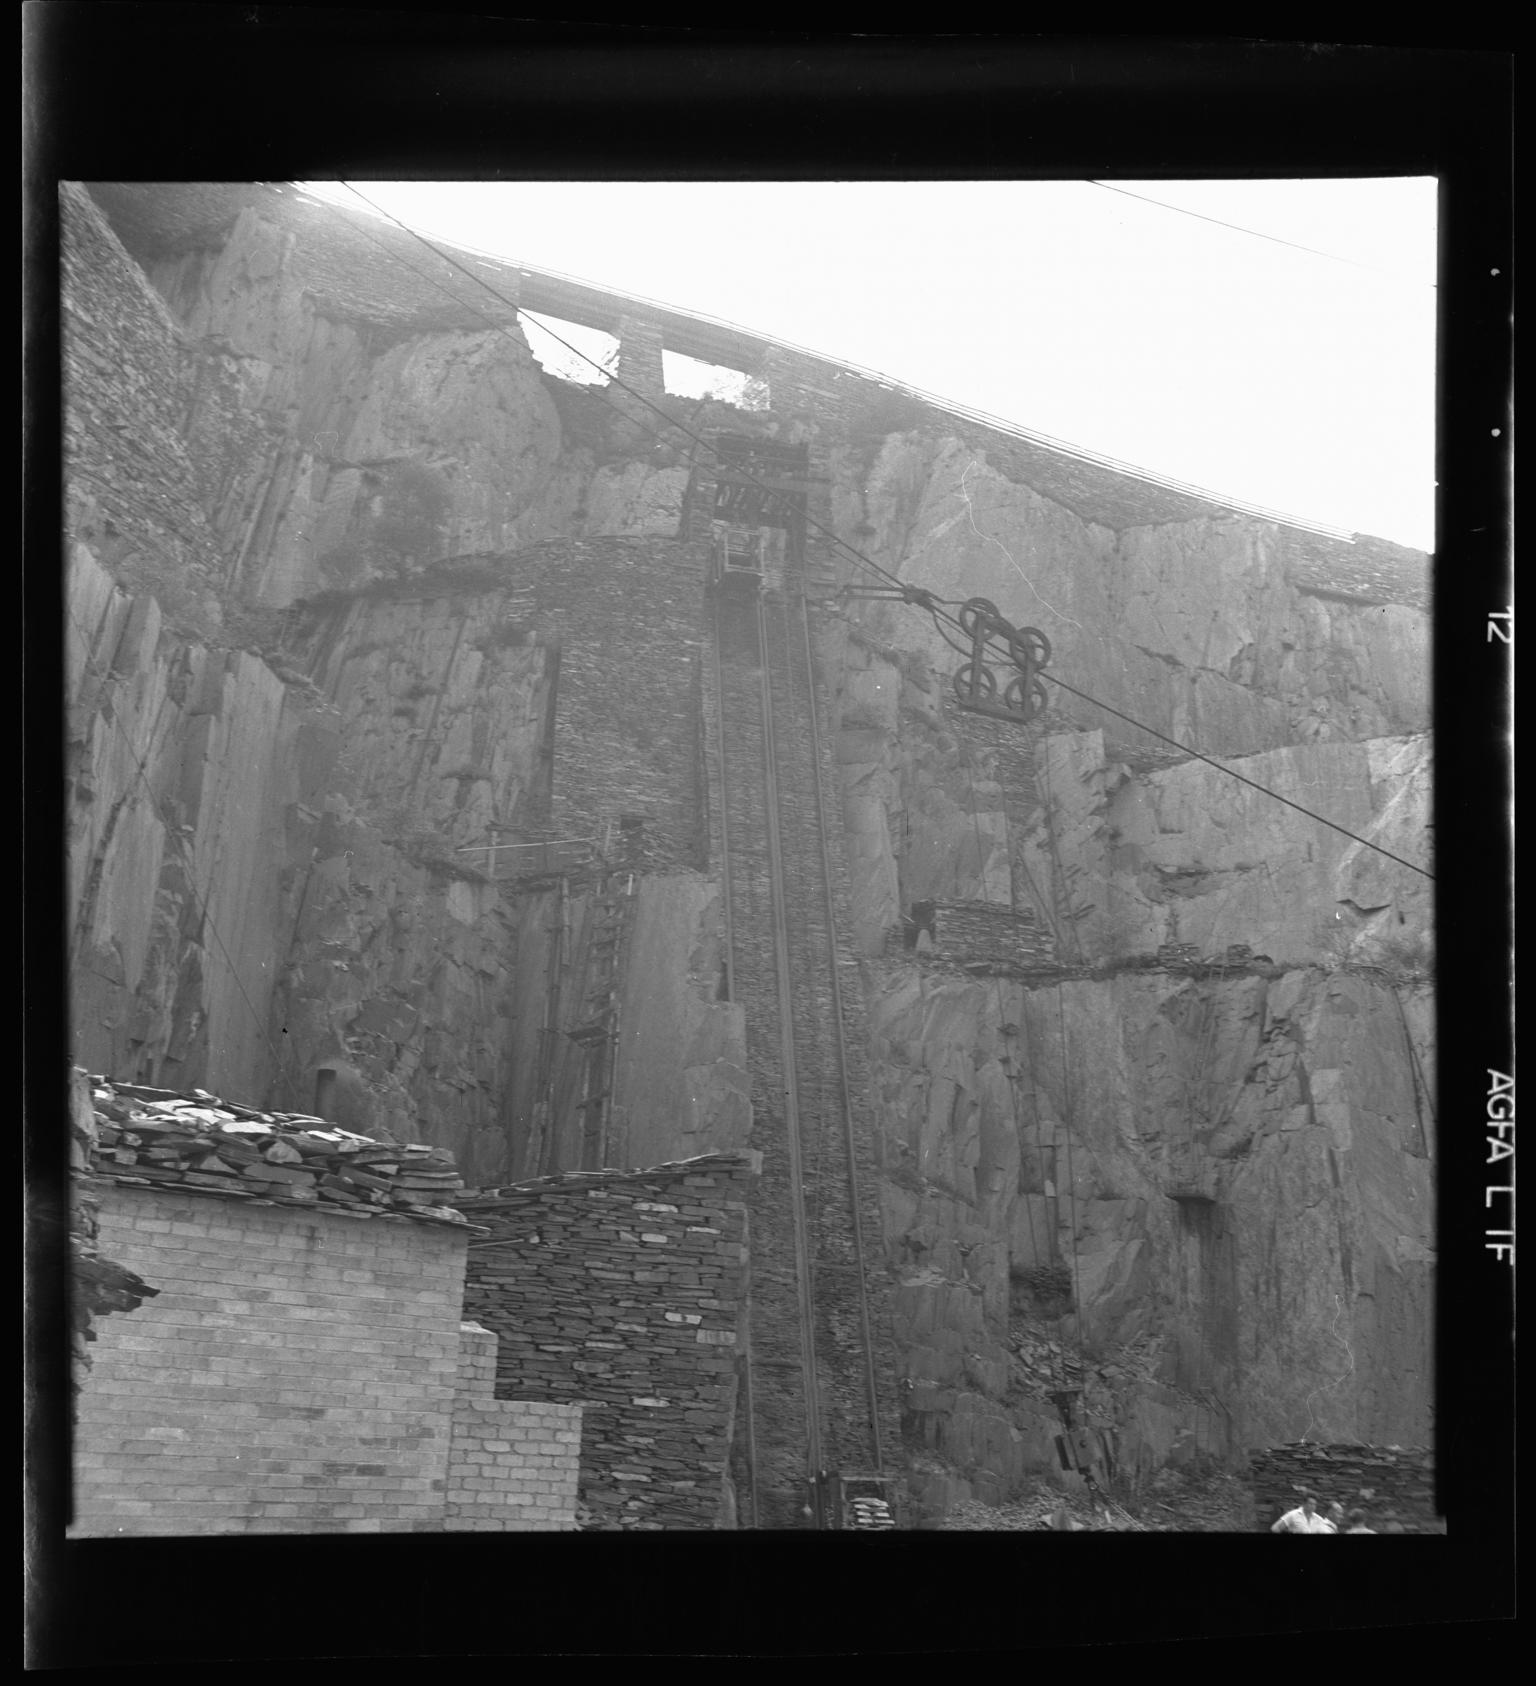 Dinorwic Quarry, film negative